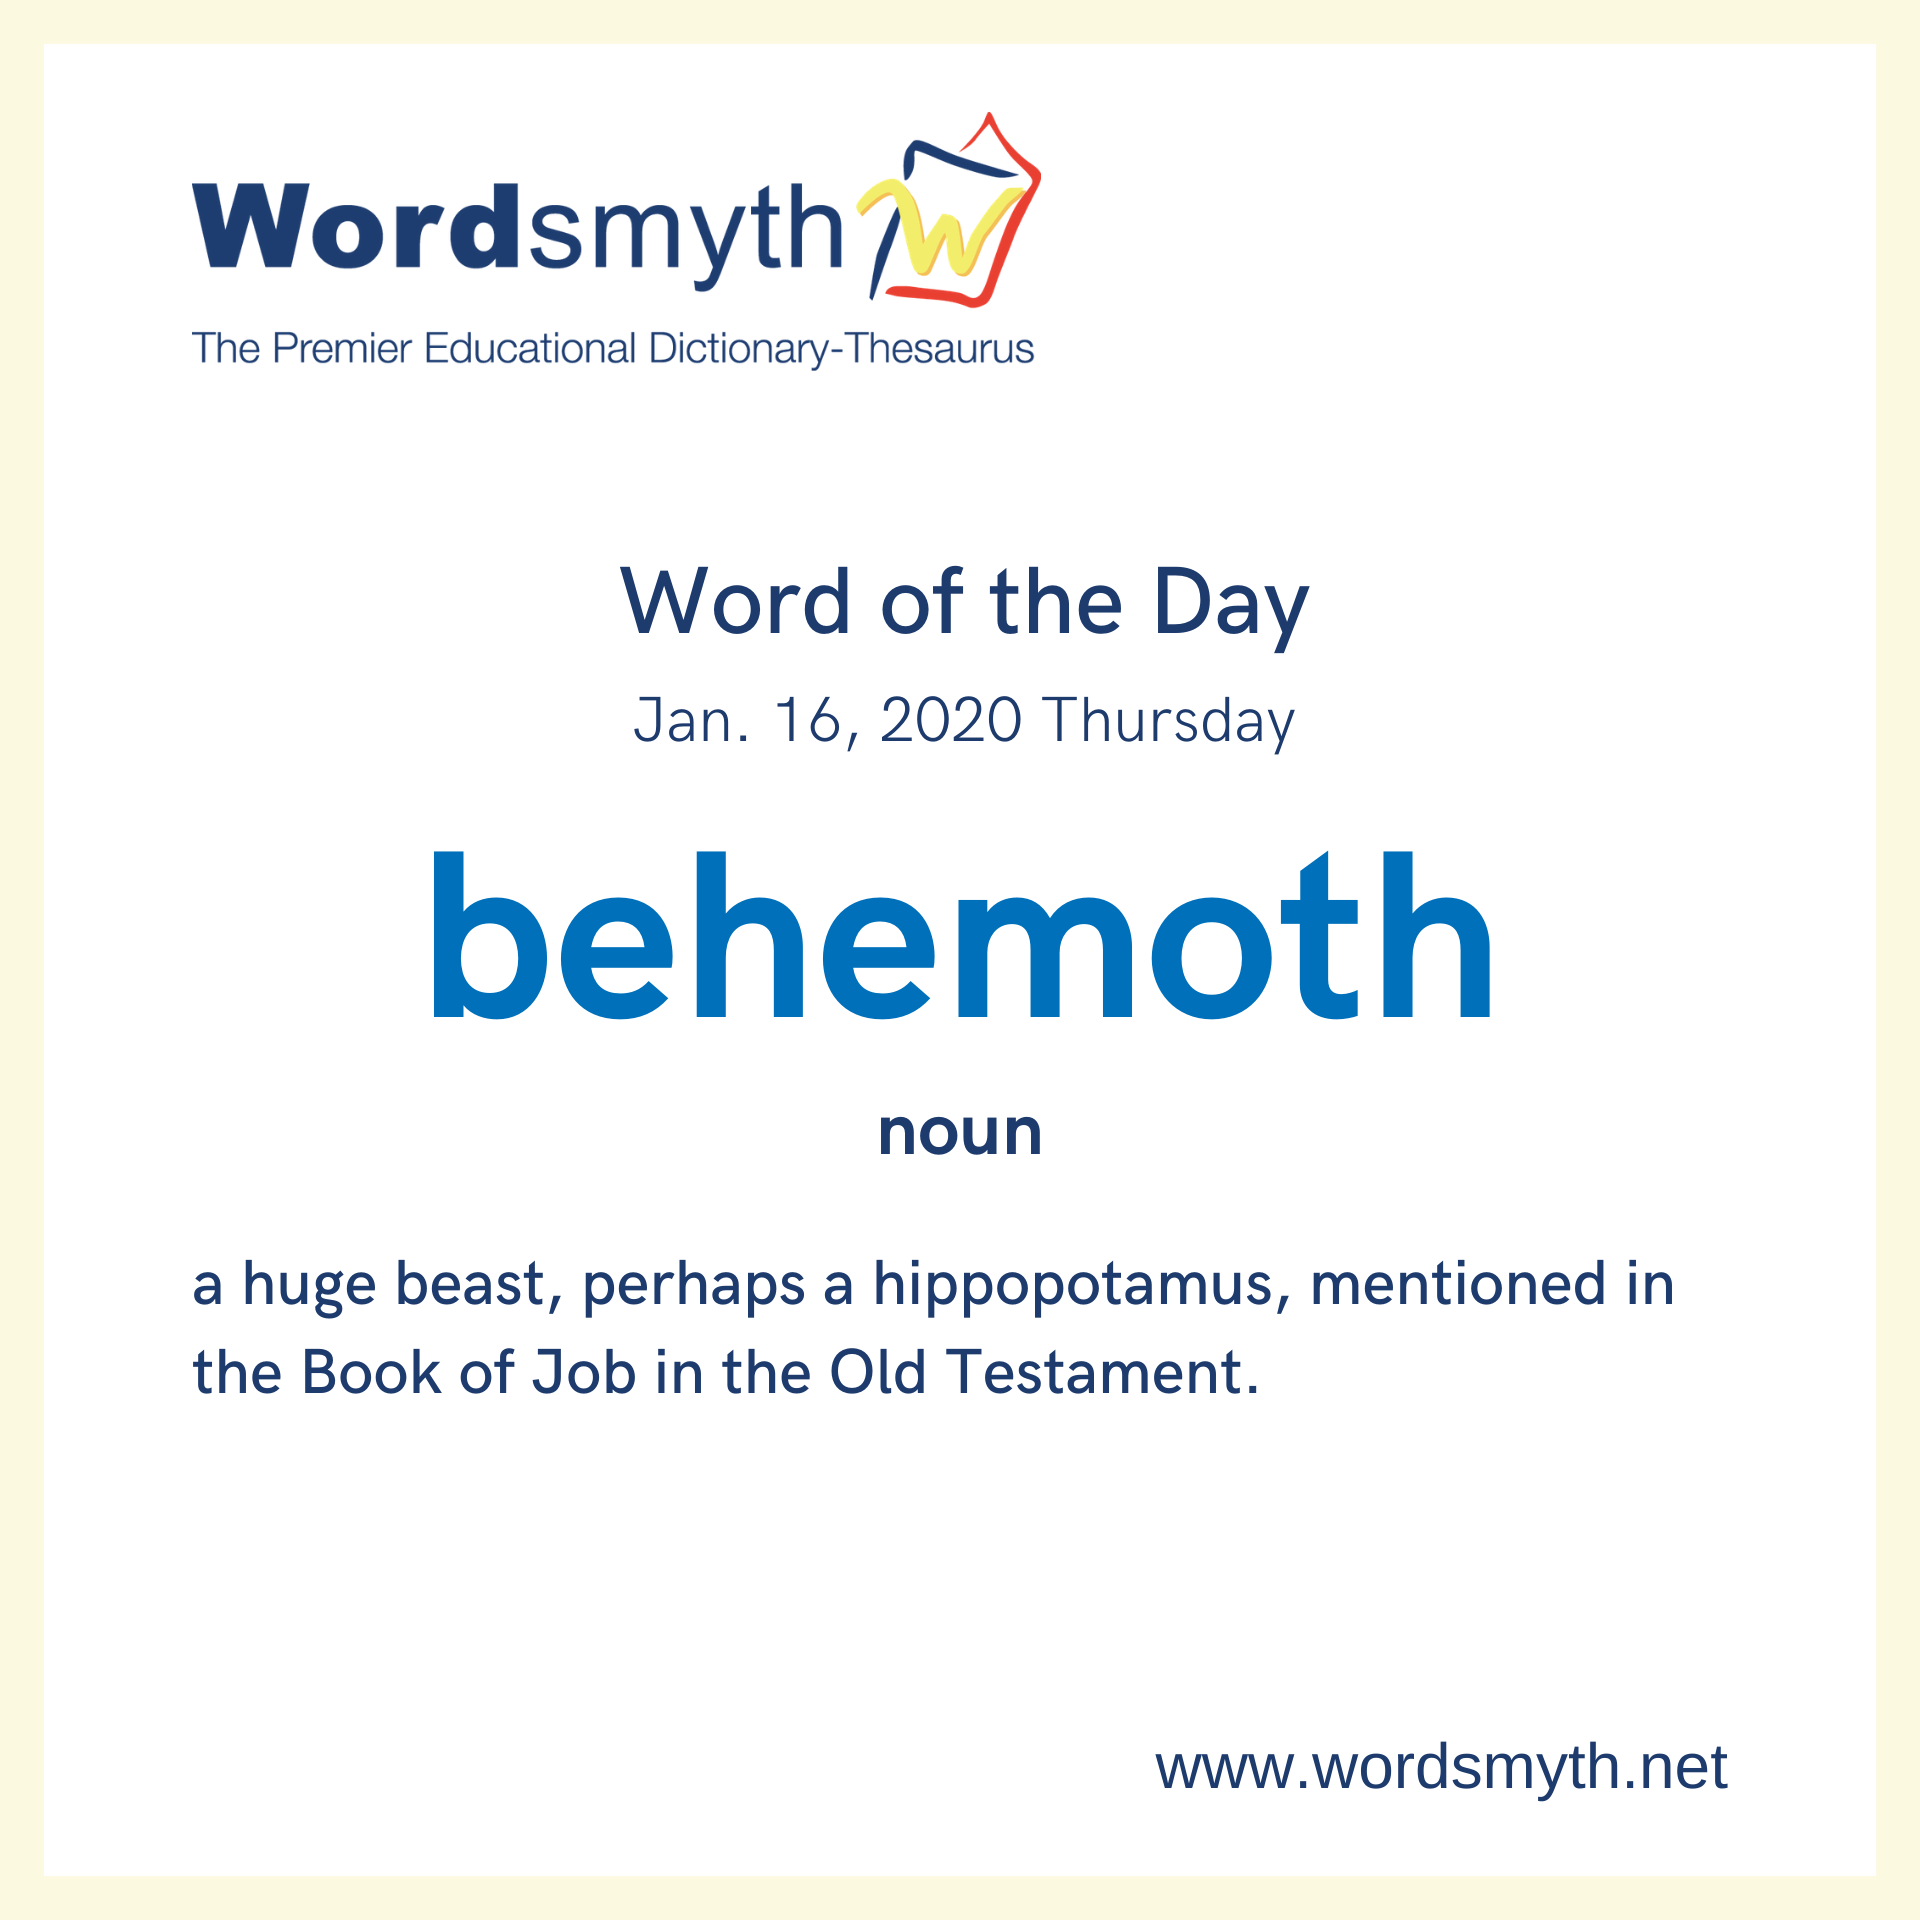 WOTD: behemoth